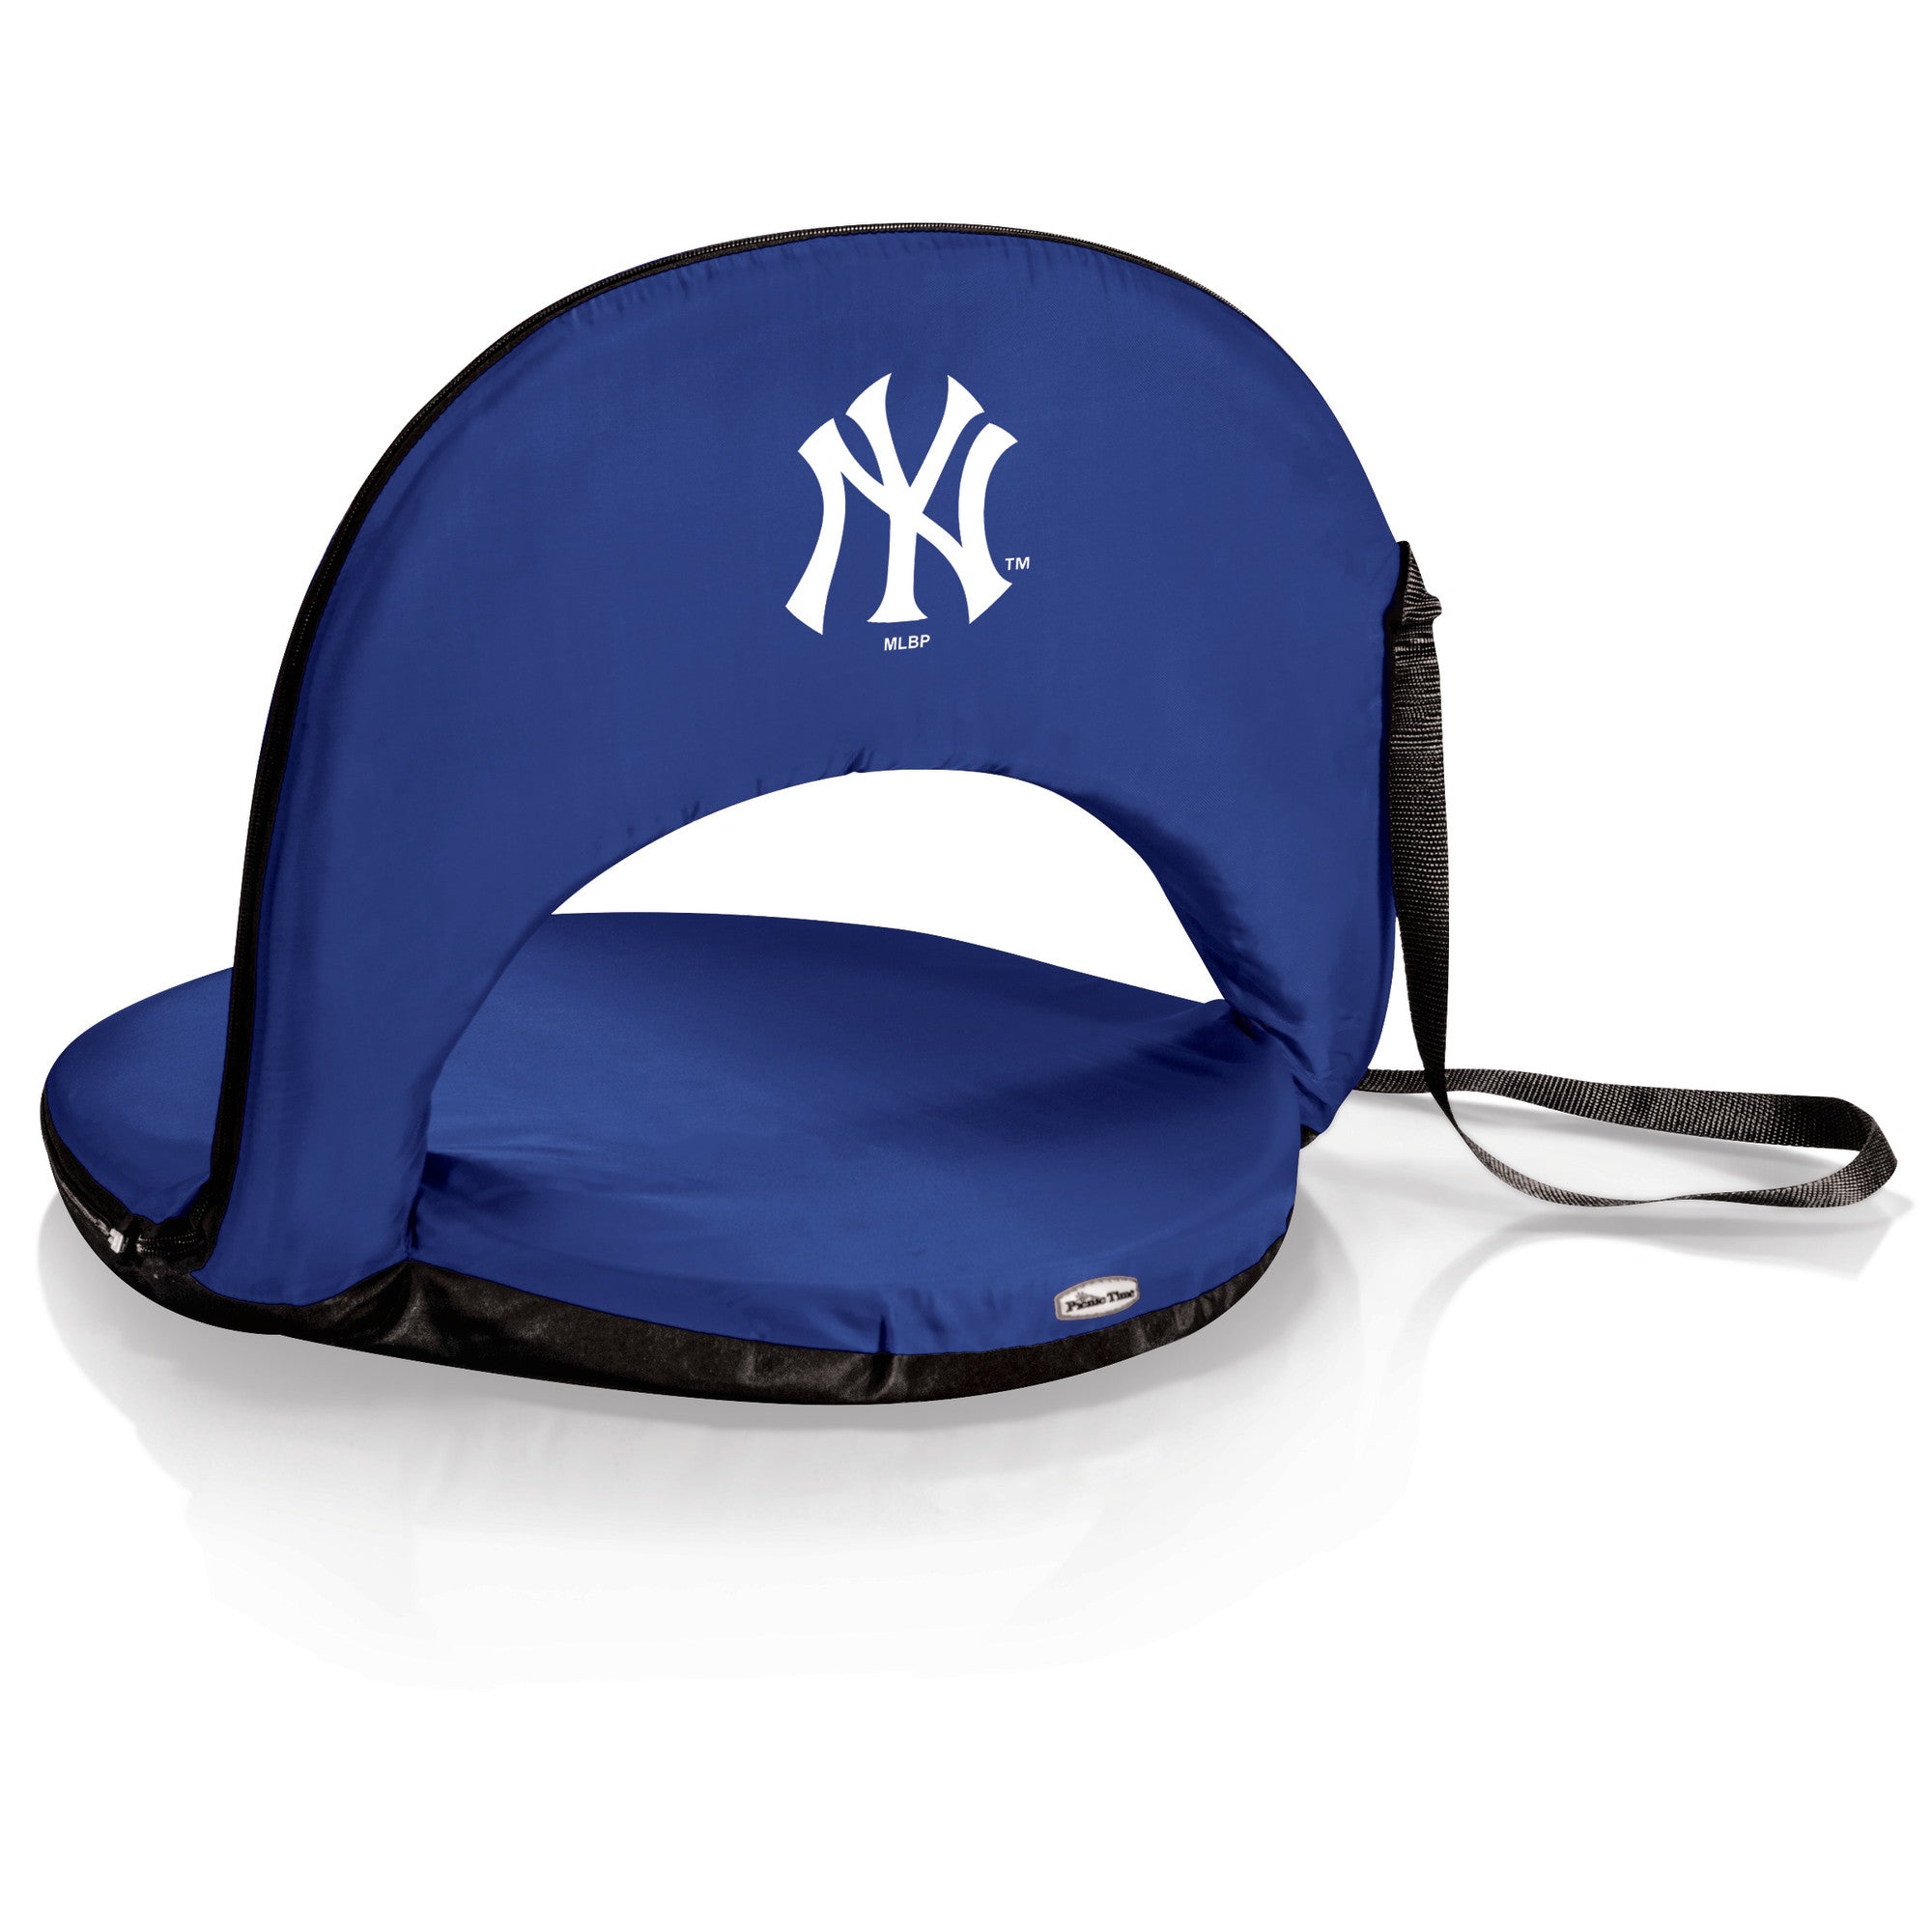 New York Yankees - Oniva Portable Reclining Seat